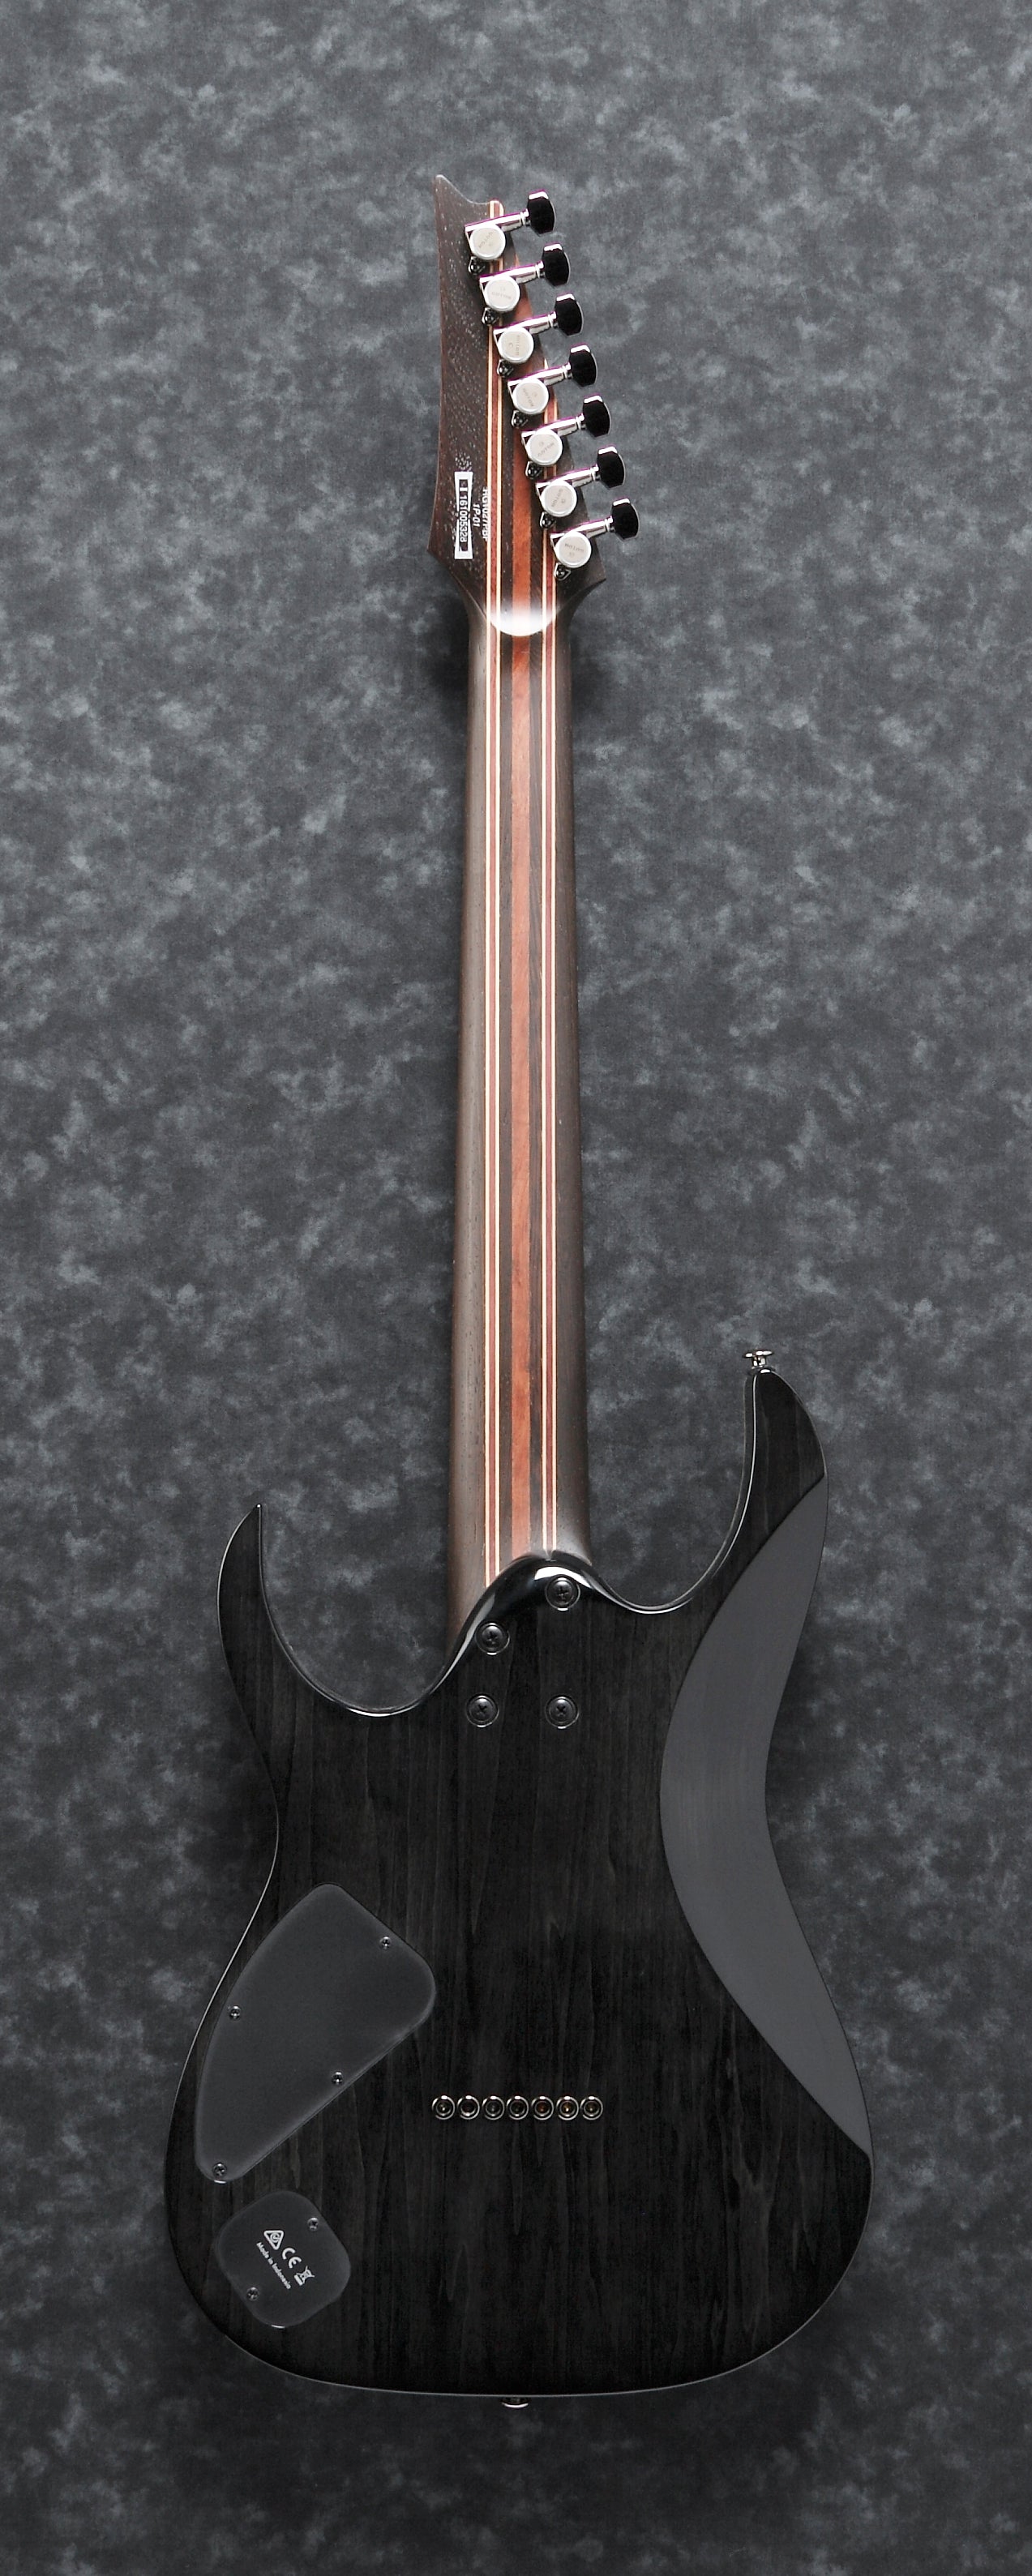 Ibanez RG Series Premium RG1027PBF-CBB (Cerulean Blue Burst) 7-string Electric Guitar 電結他